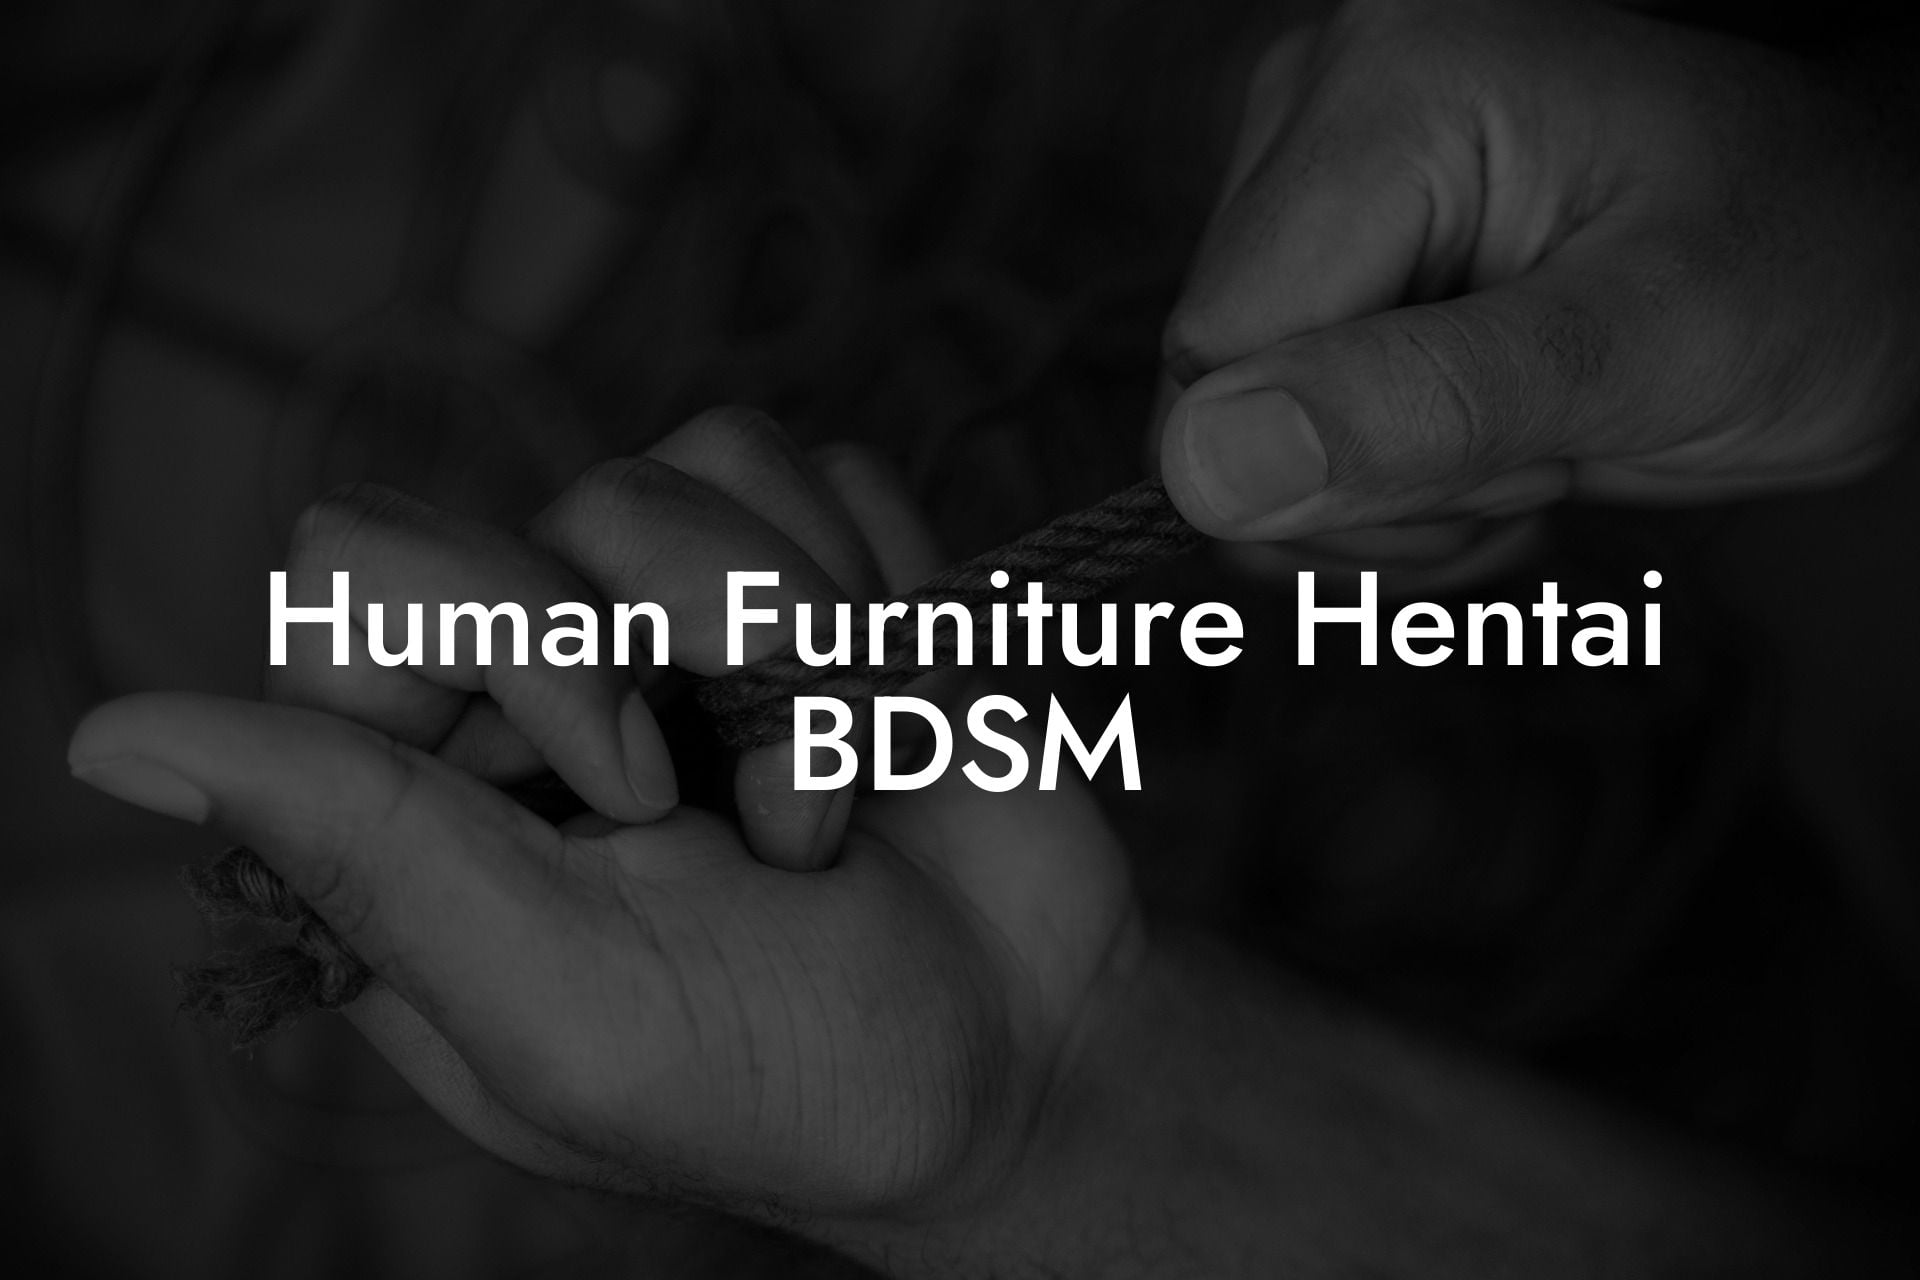 Human Furniture Hentai BDSM